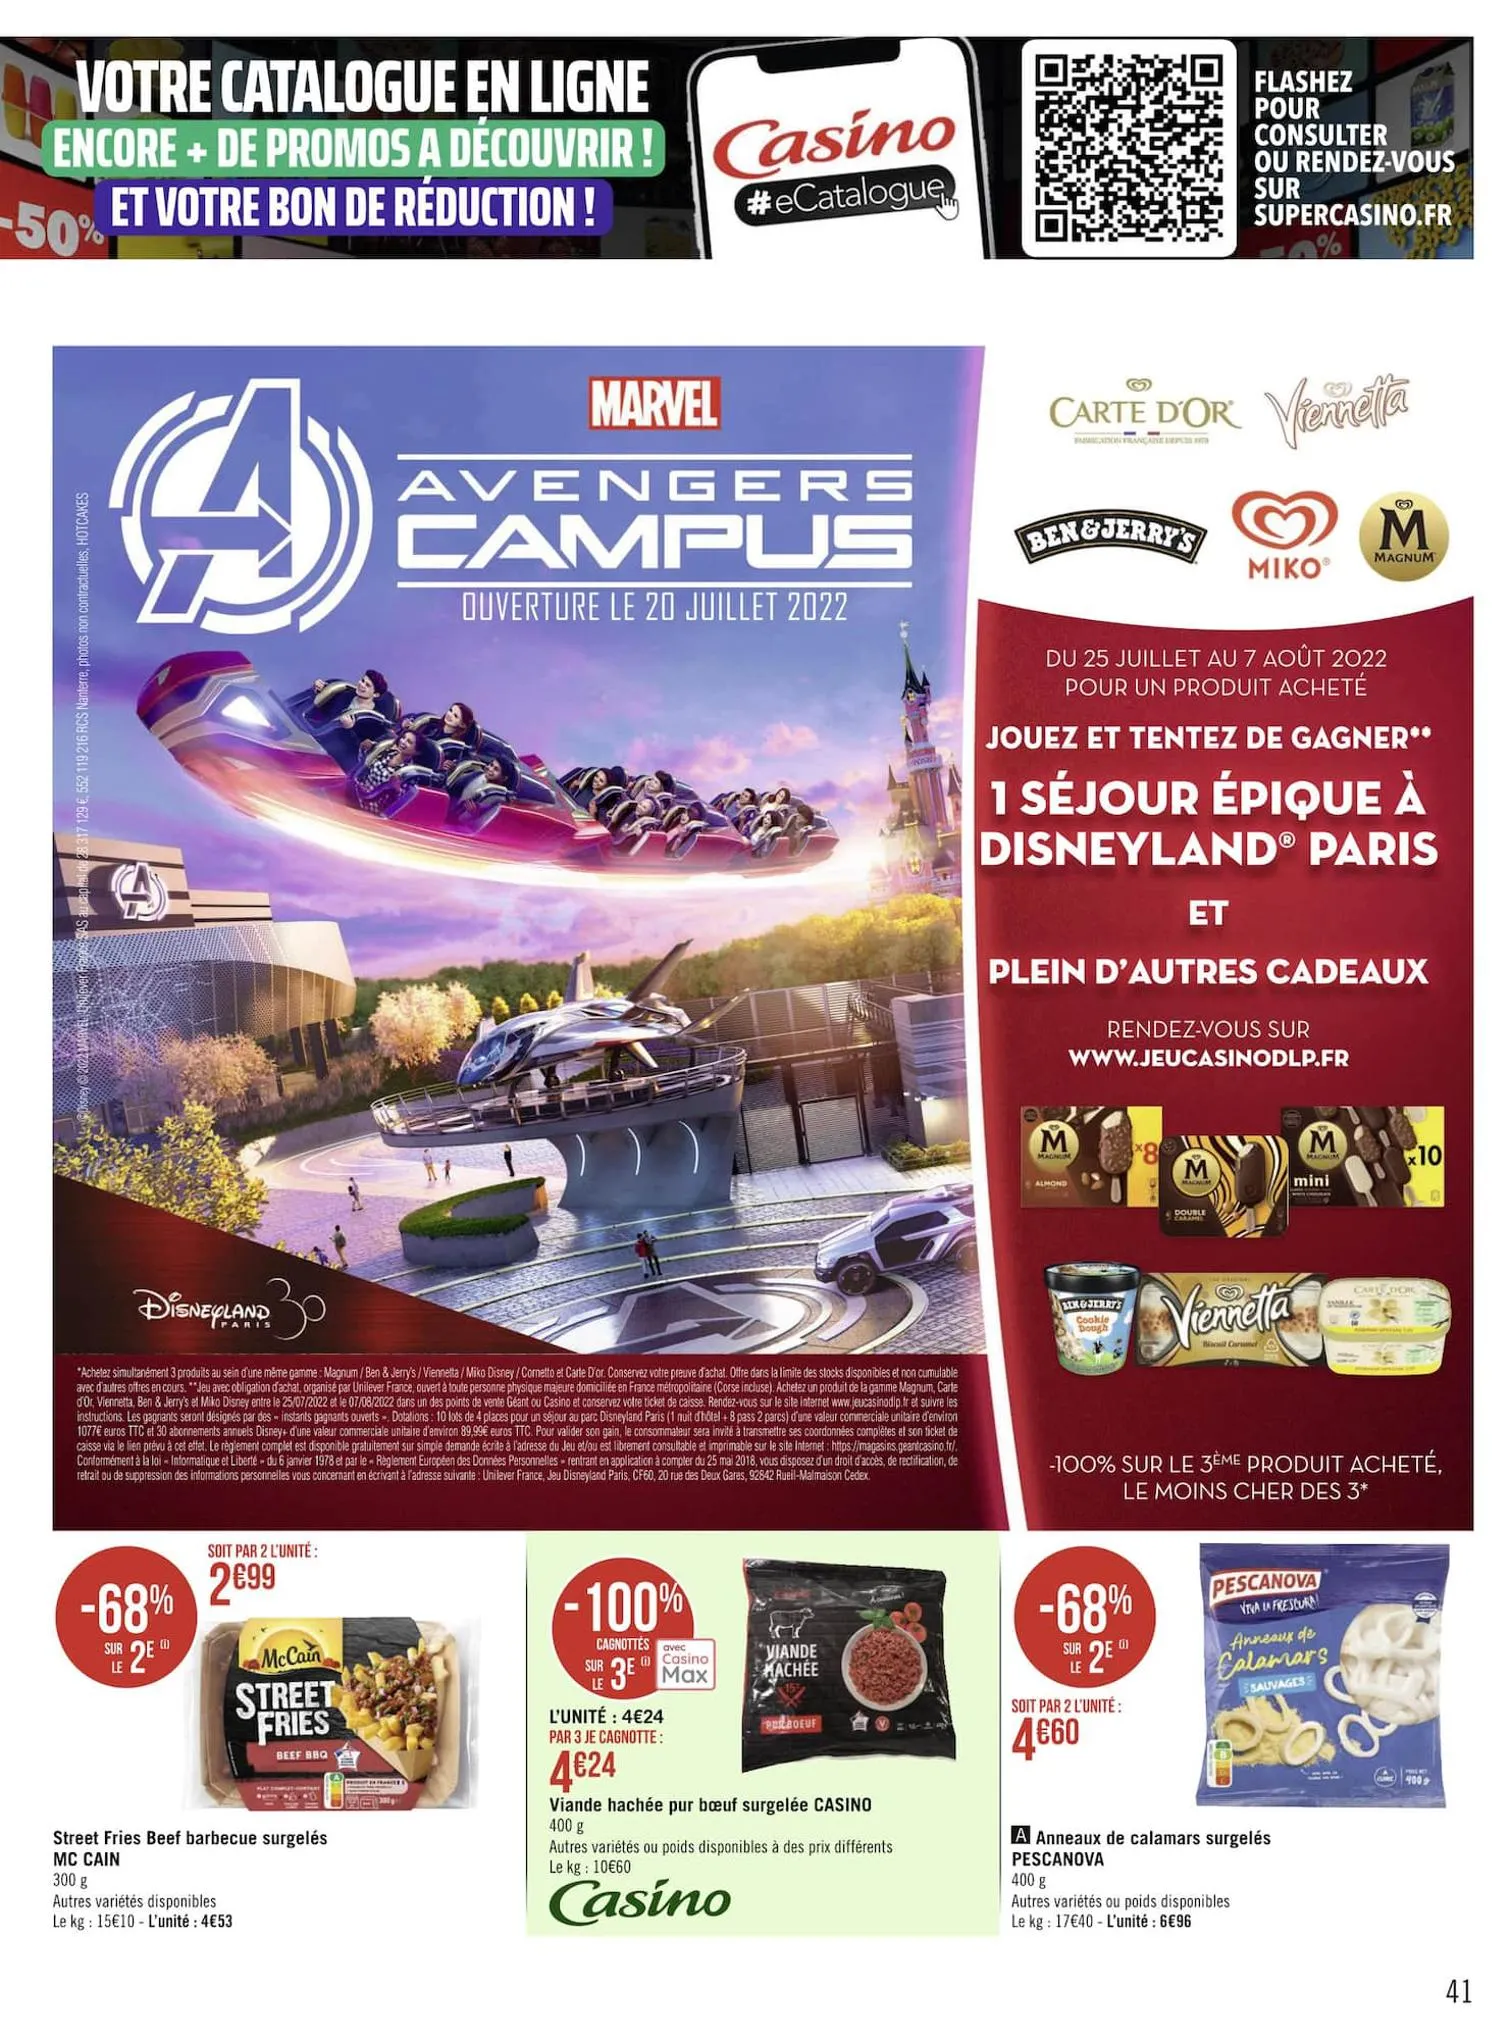 Catalogue Catalogue Casino Supermarchés, page 00041